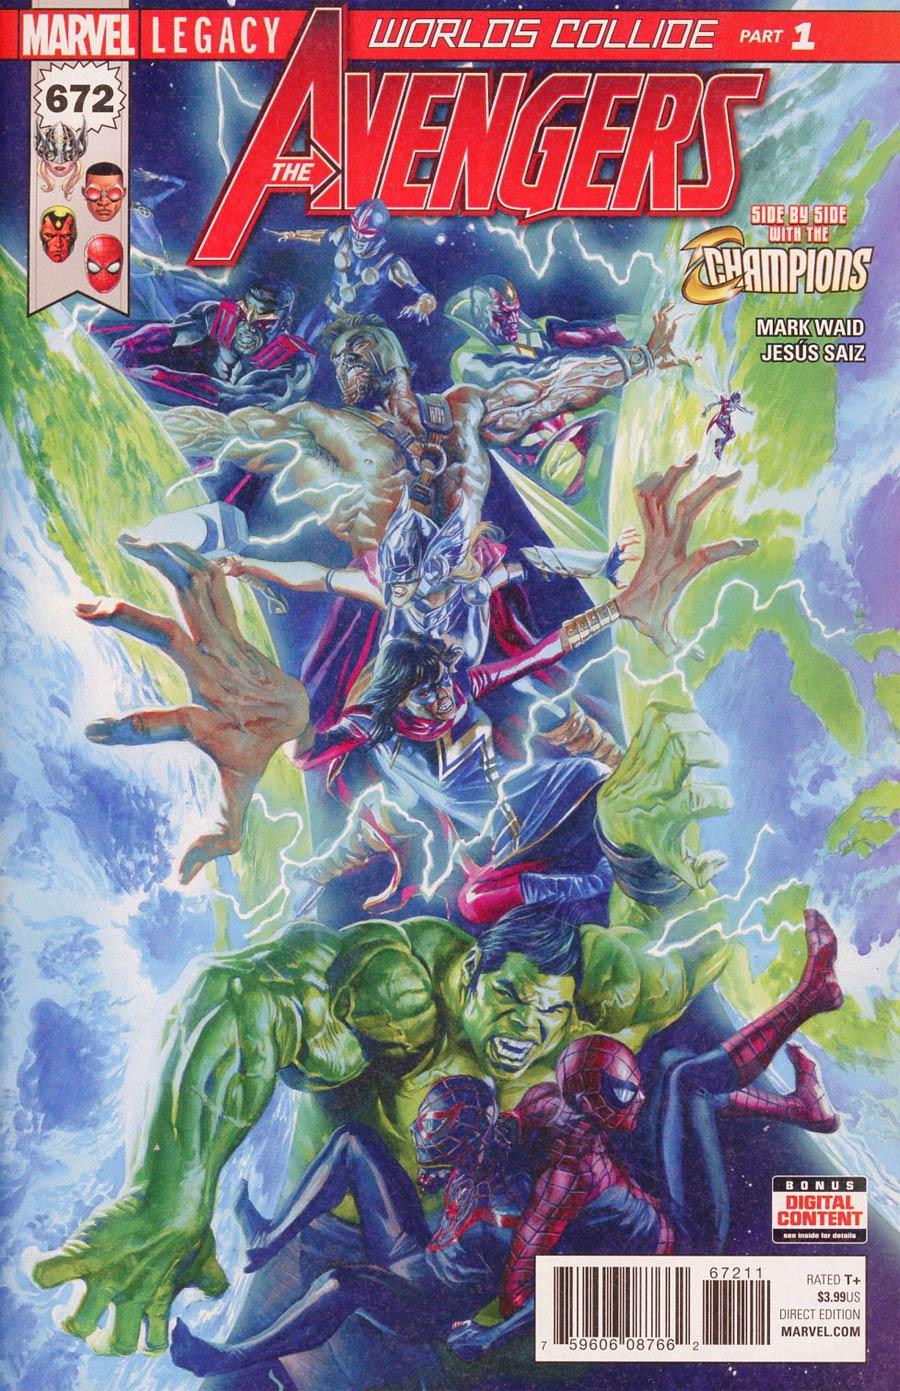 The Avengers Vol. 6 #672